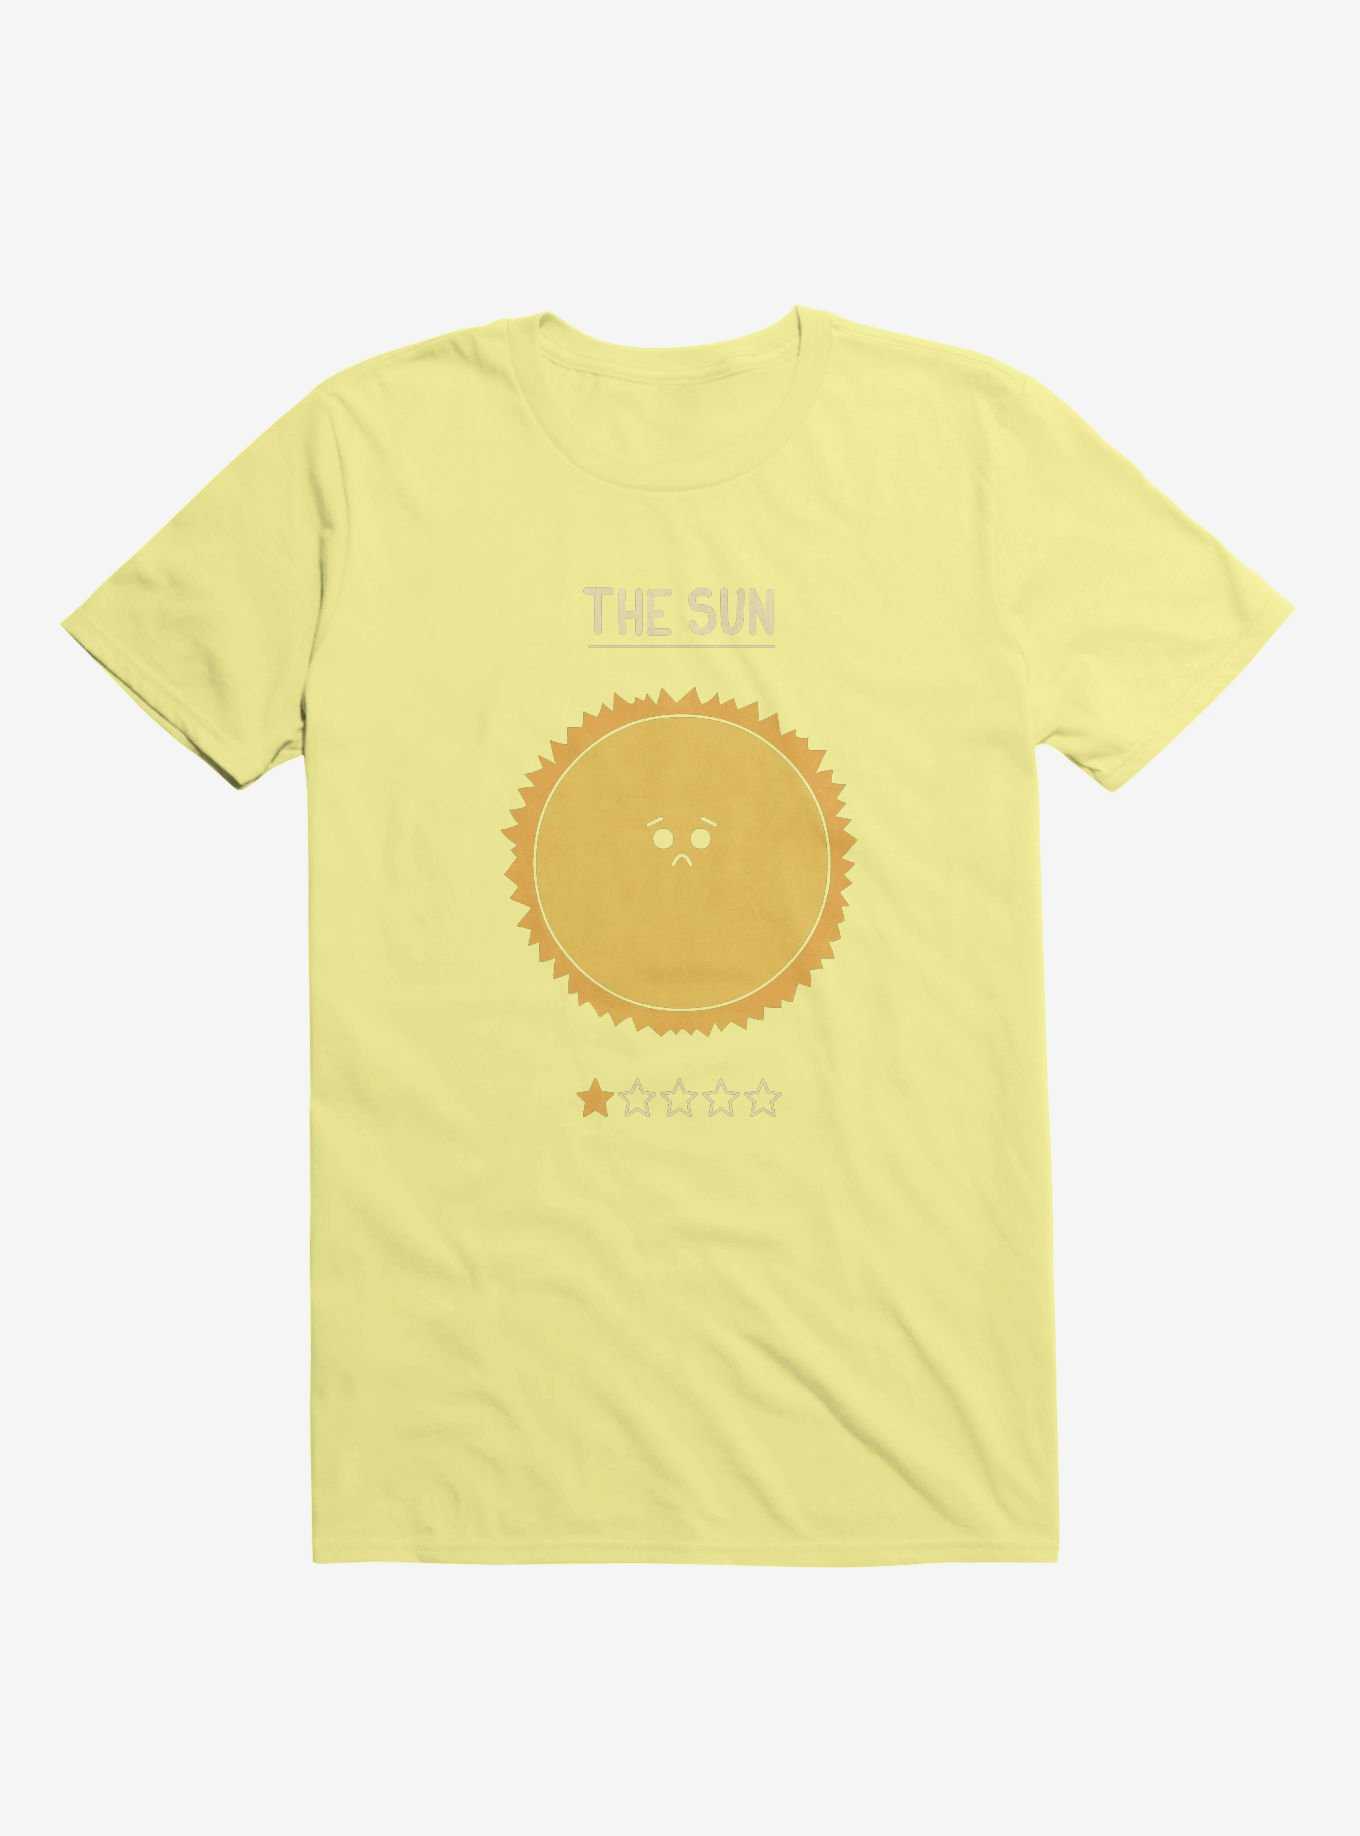 The Sun One Star Rating Corn Silk Yellow T-Shirt, , hi-res